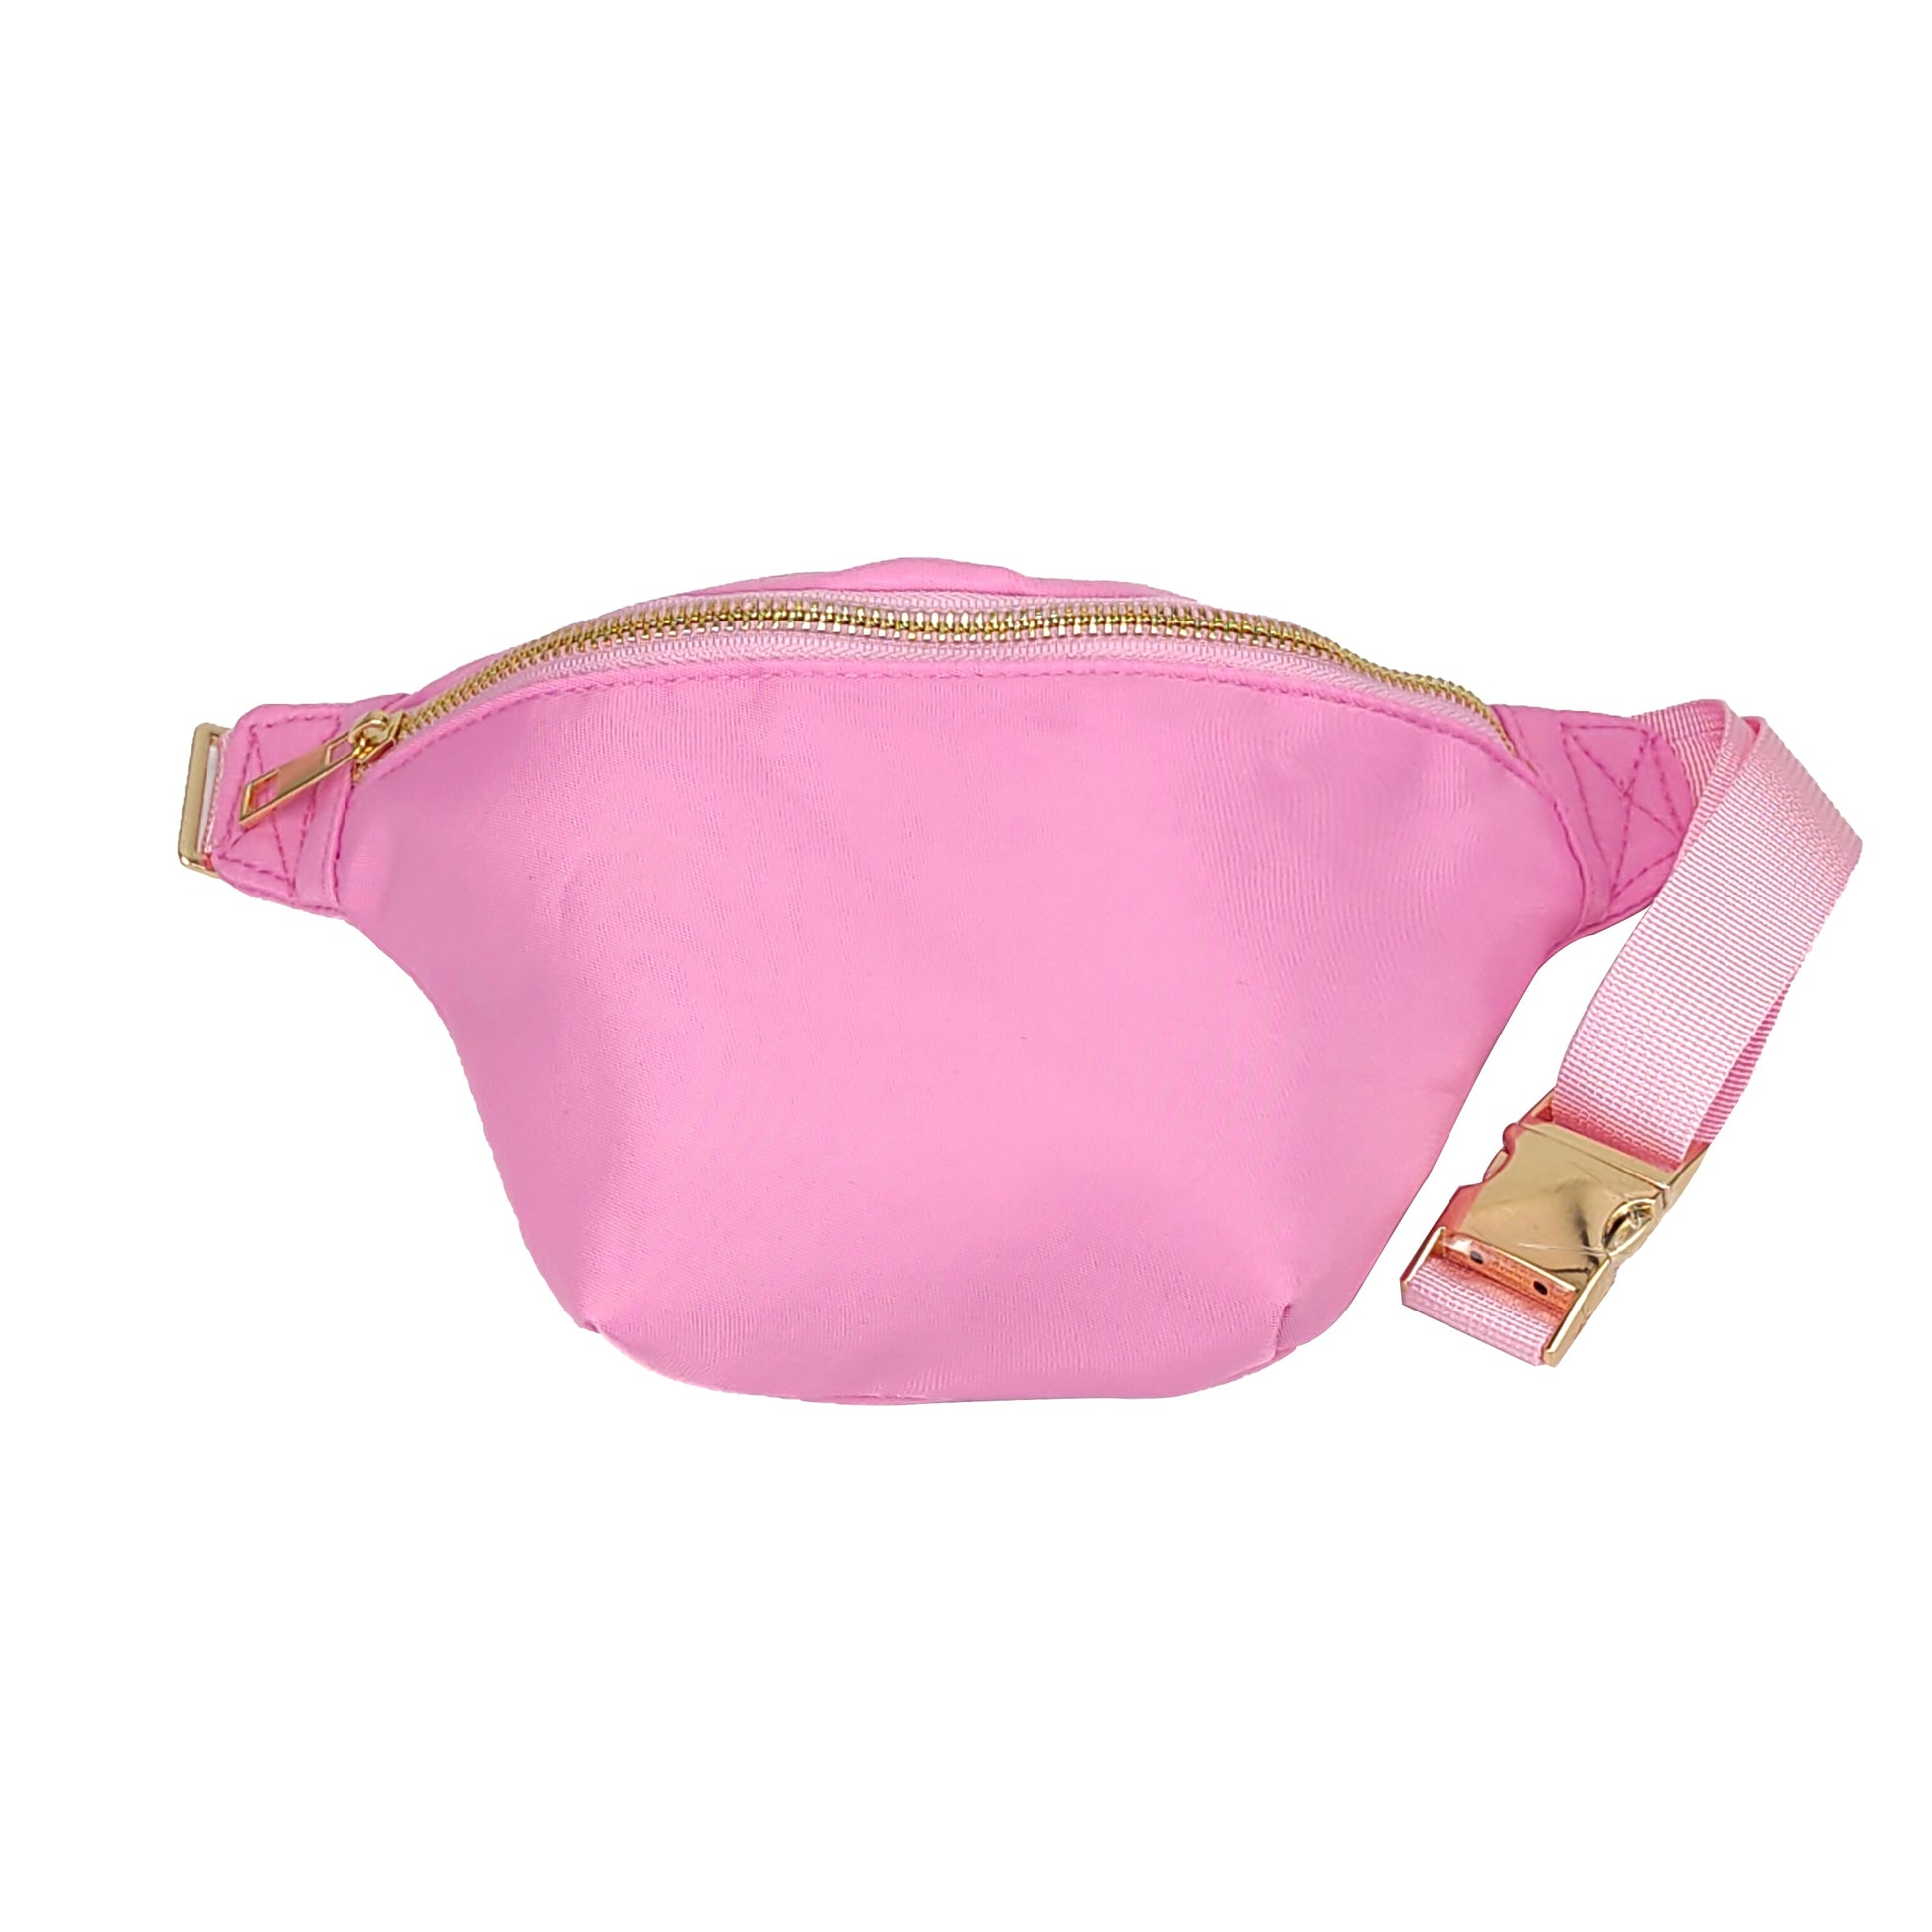 Men Women Sports Fanny Pack Belt Bag hot pink